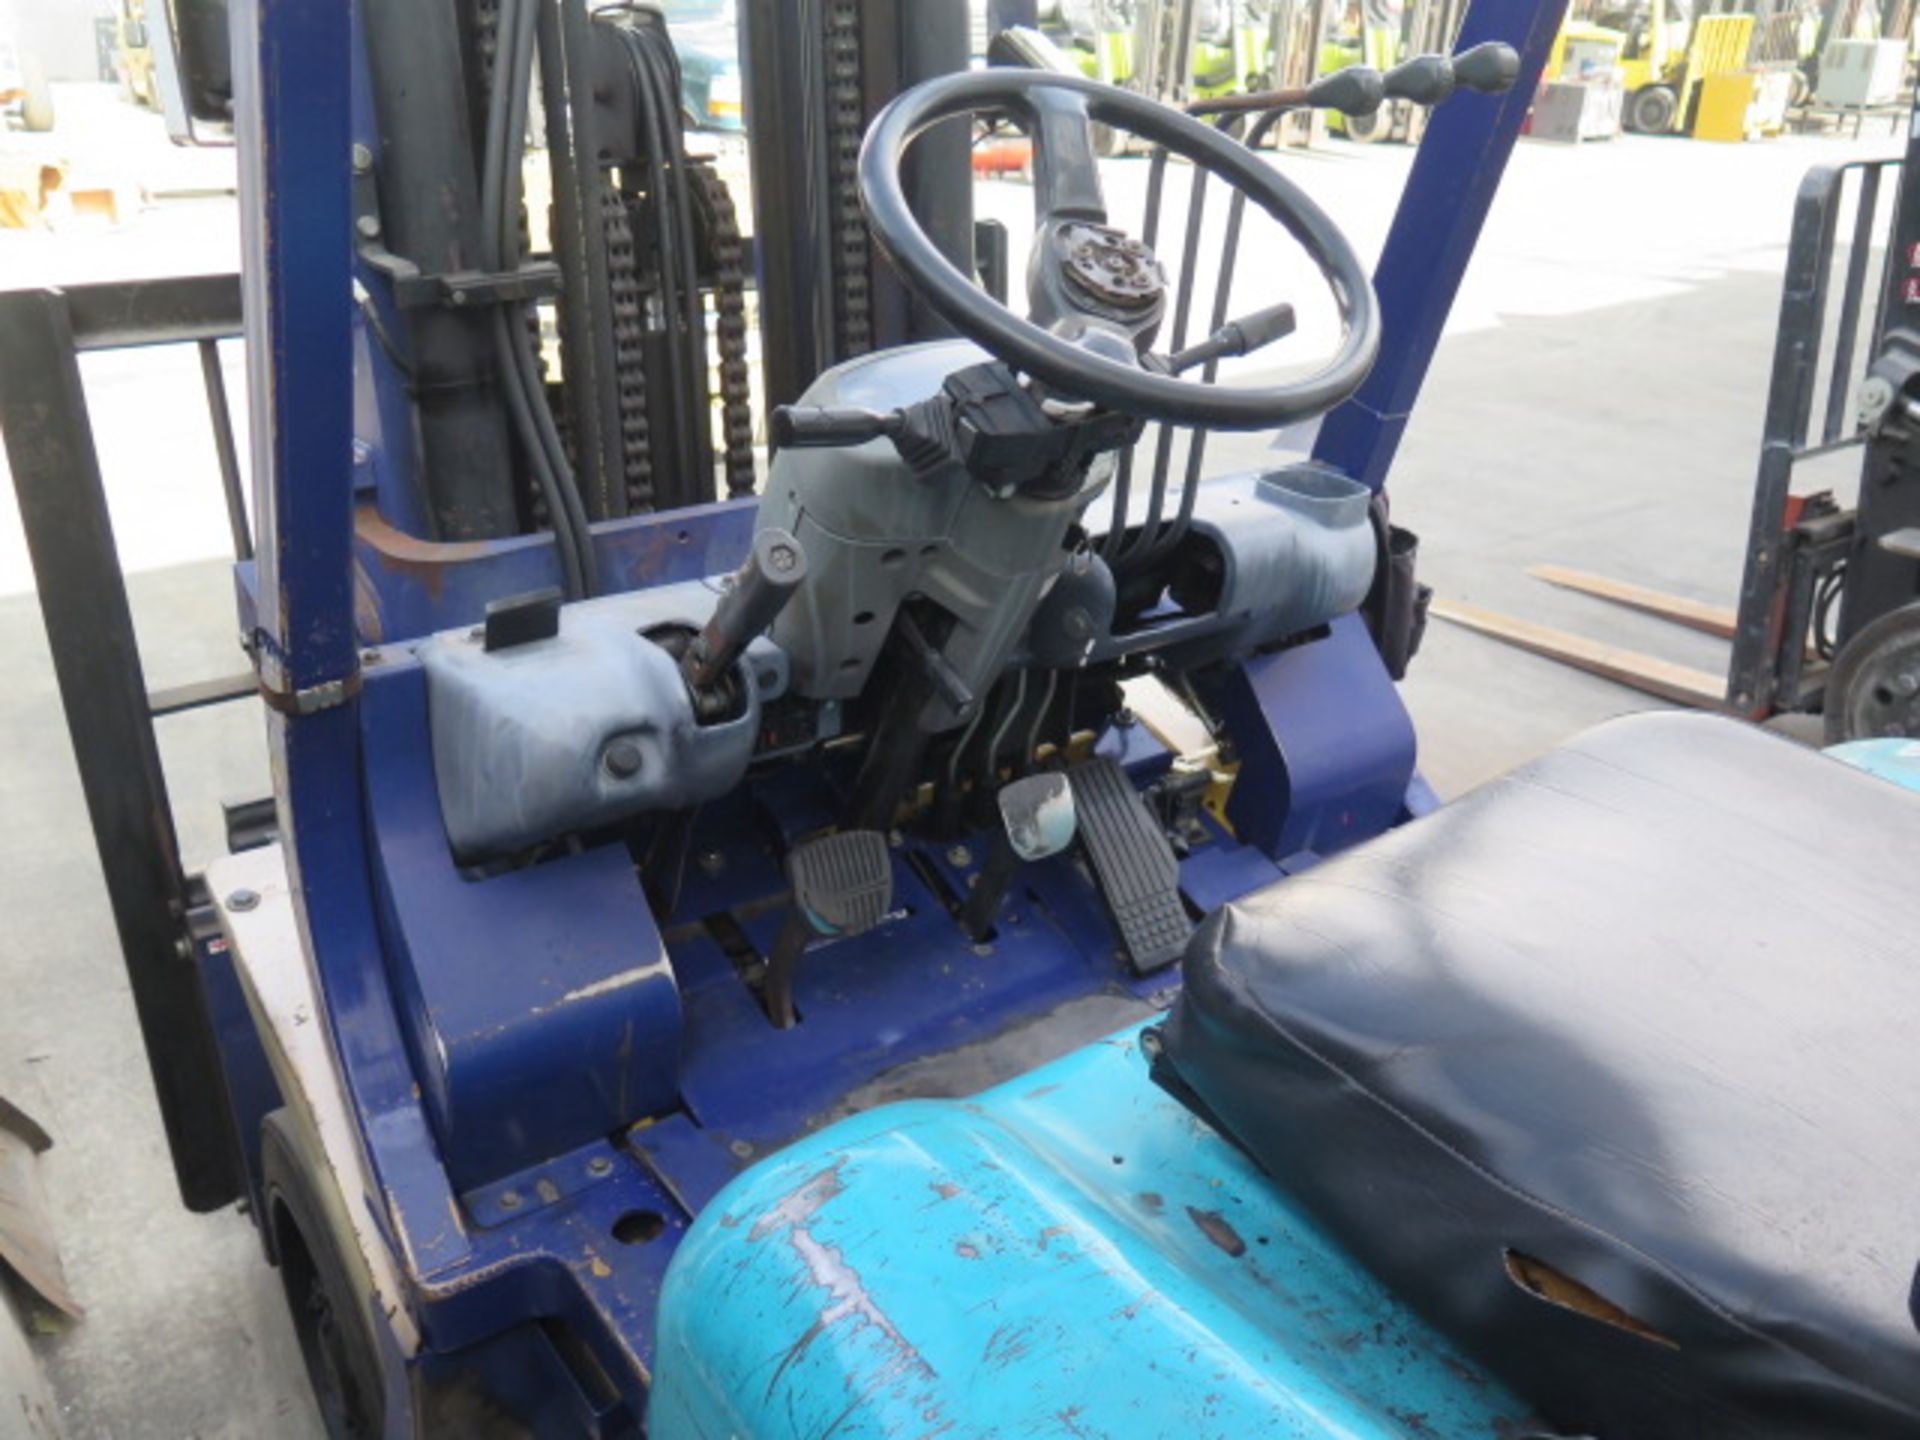 Komatsu 8000 Lb Cap LPG Forklift w/ 3-Stage Mast, Side Shift, Cushion Tires - Image 8 of 10